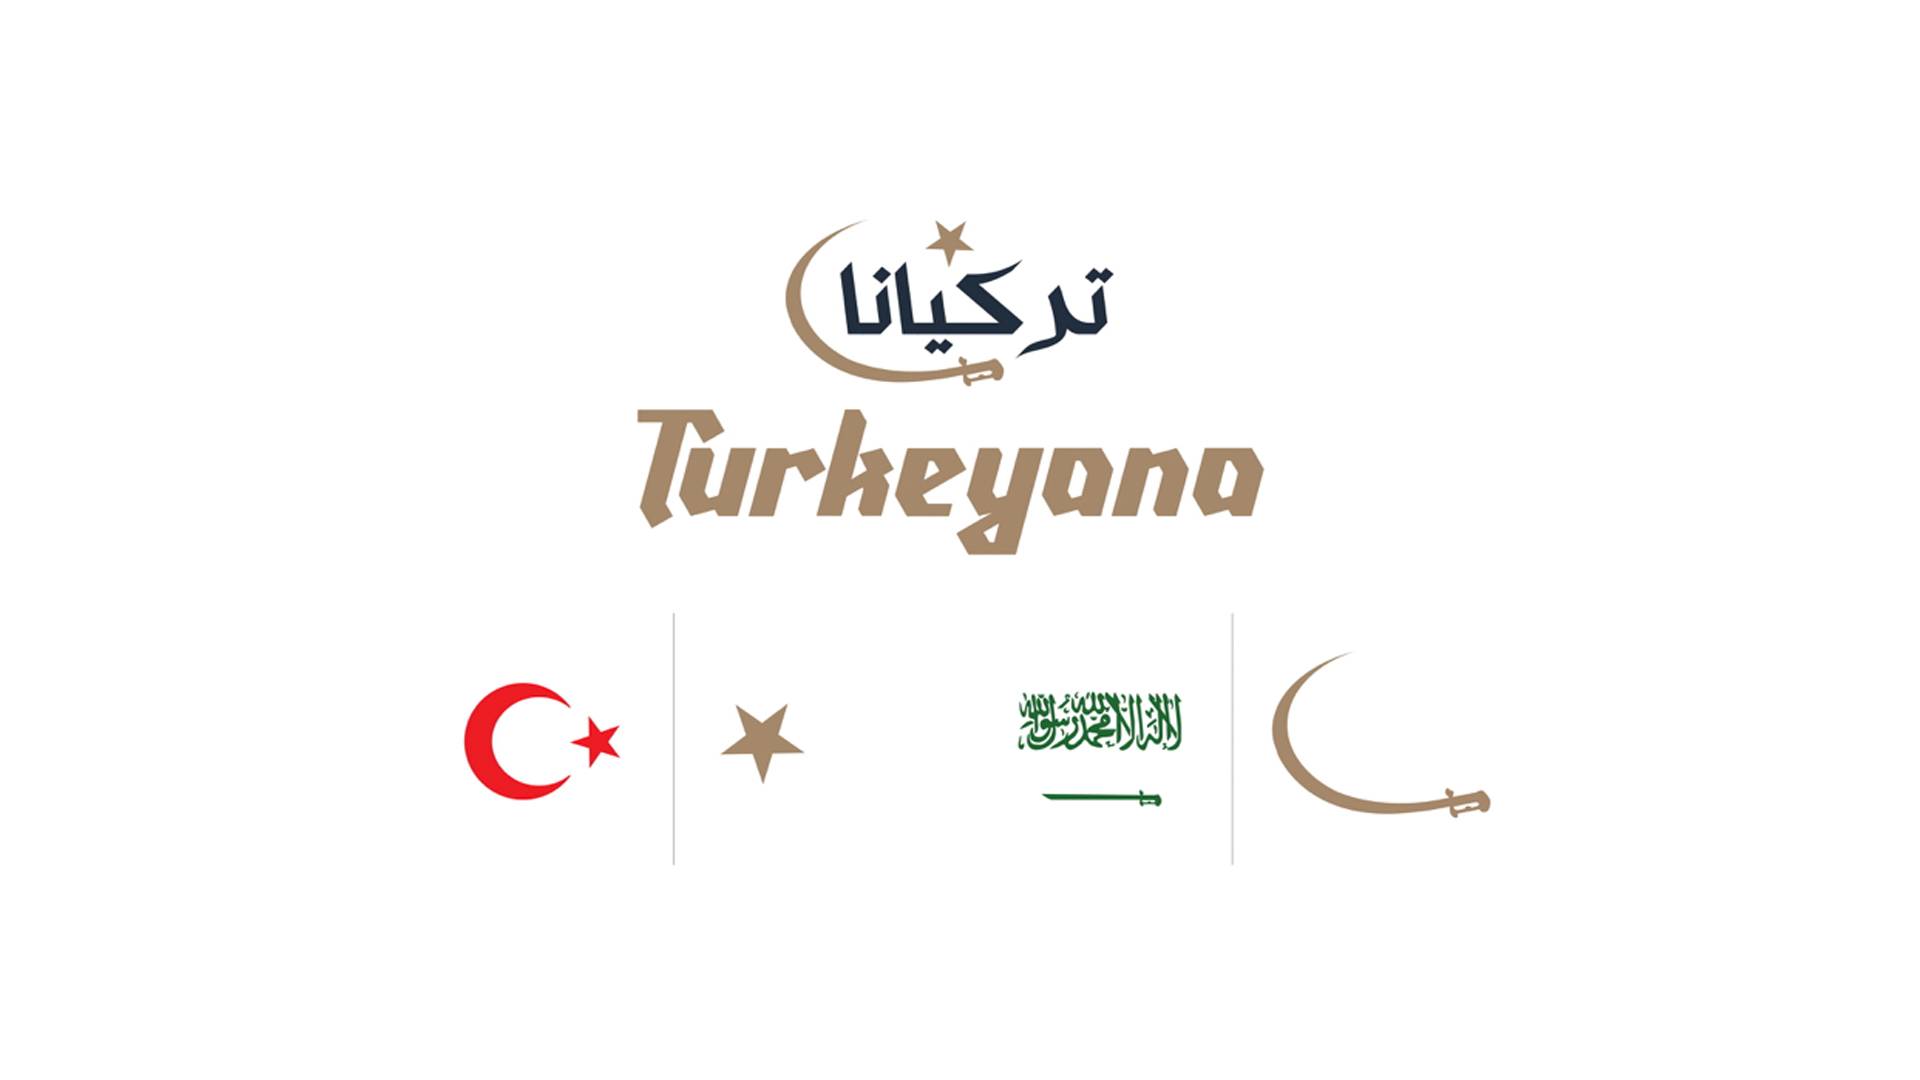 turkeyana restaurant logo konsepti